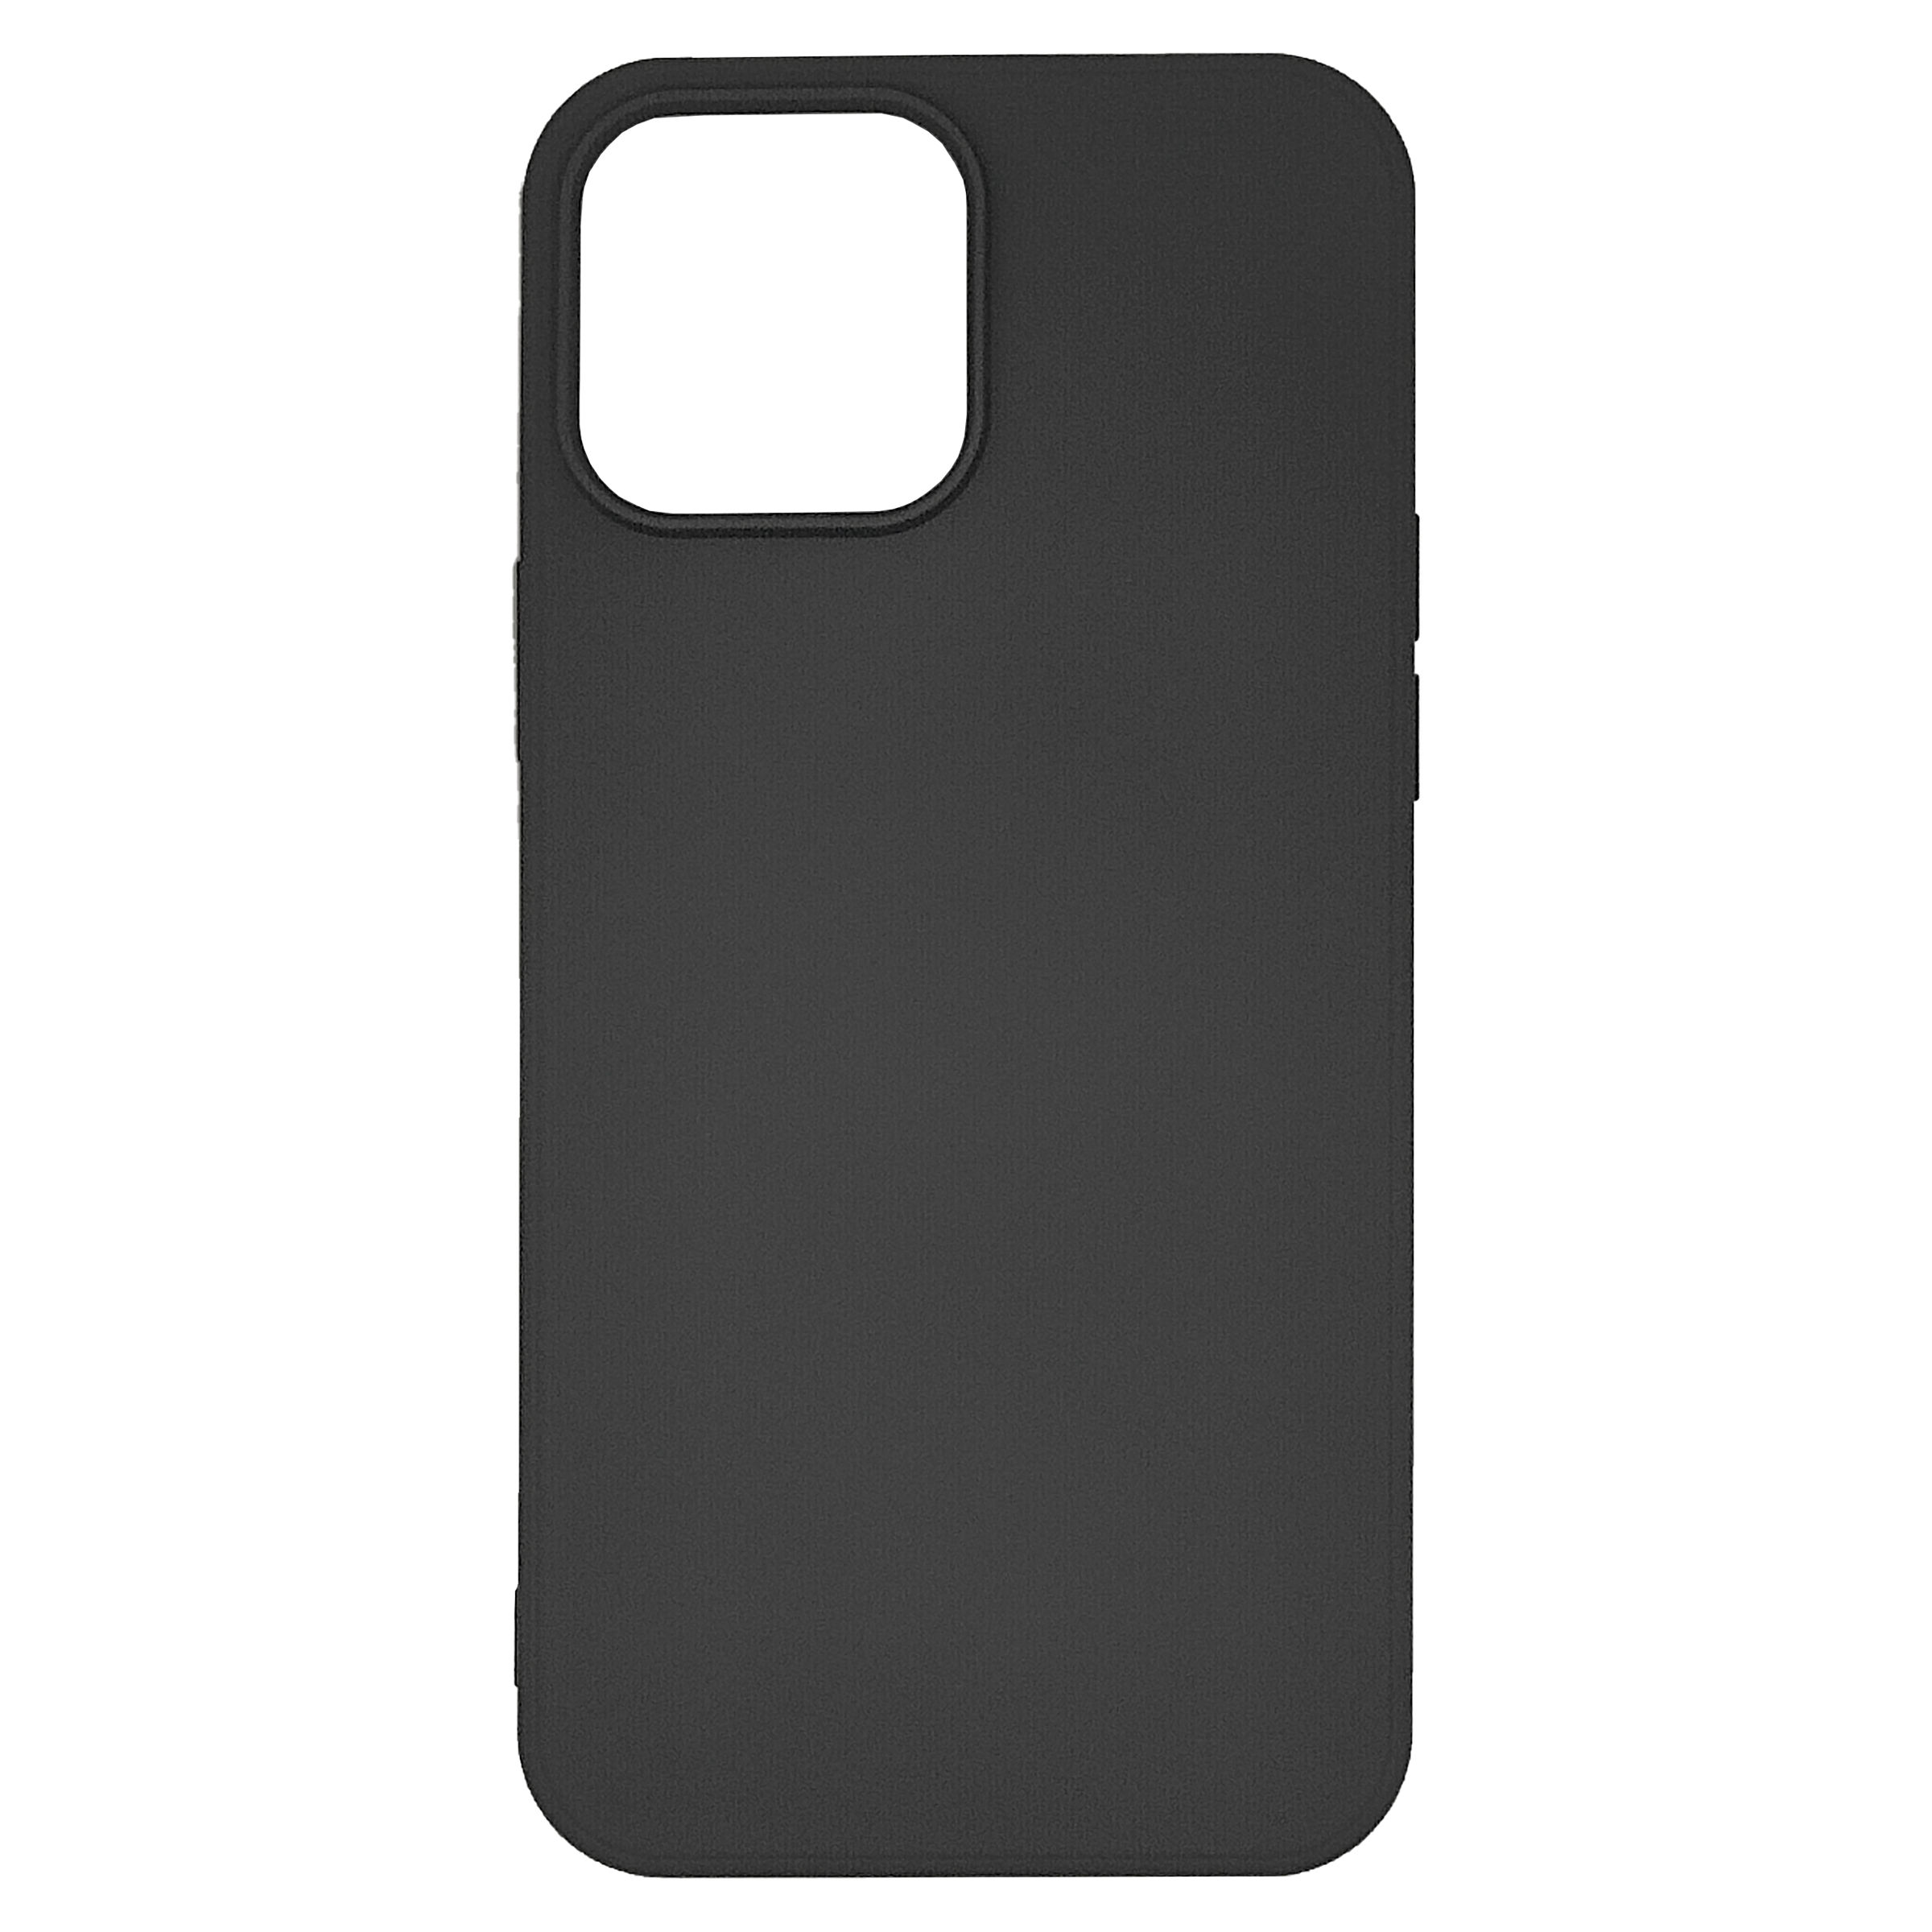 Soundrevo TPU Back Case For iPhone 13 Pro (Anti-Slip, C013P, Black)